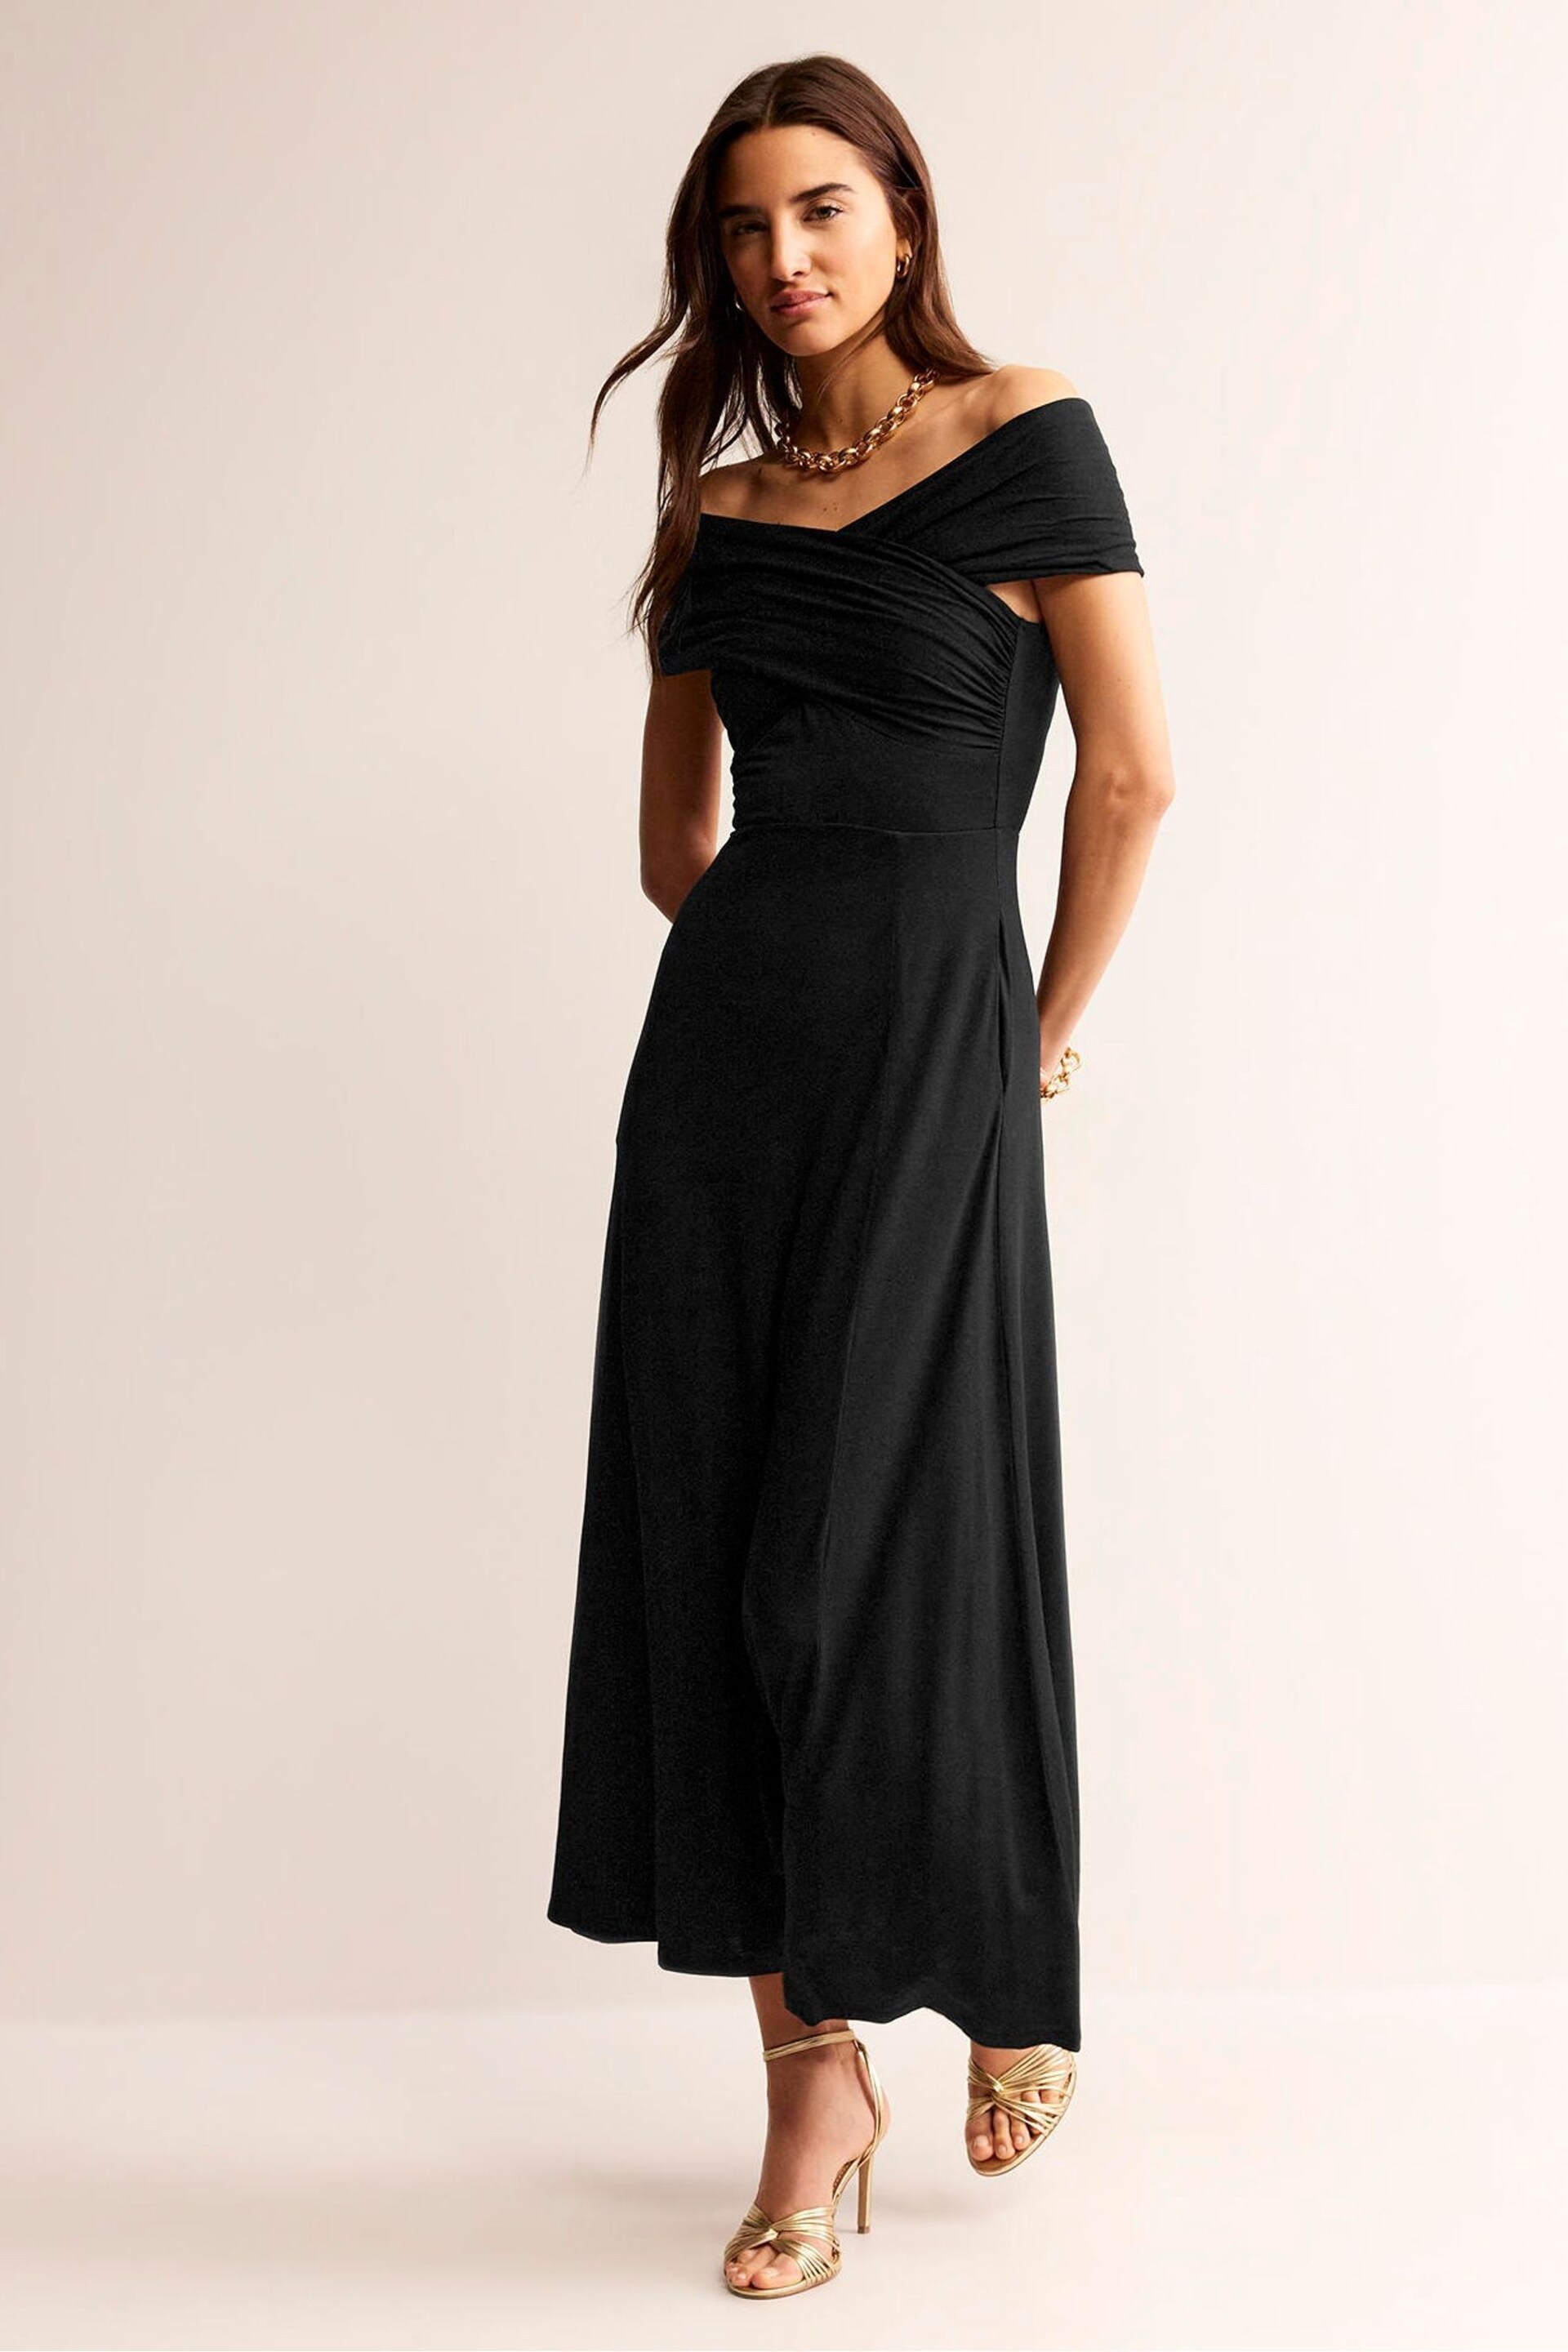 Boden Black Petite Bardot Jersey Maxi Dress - Image 1 of 5